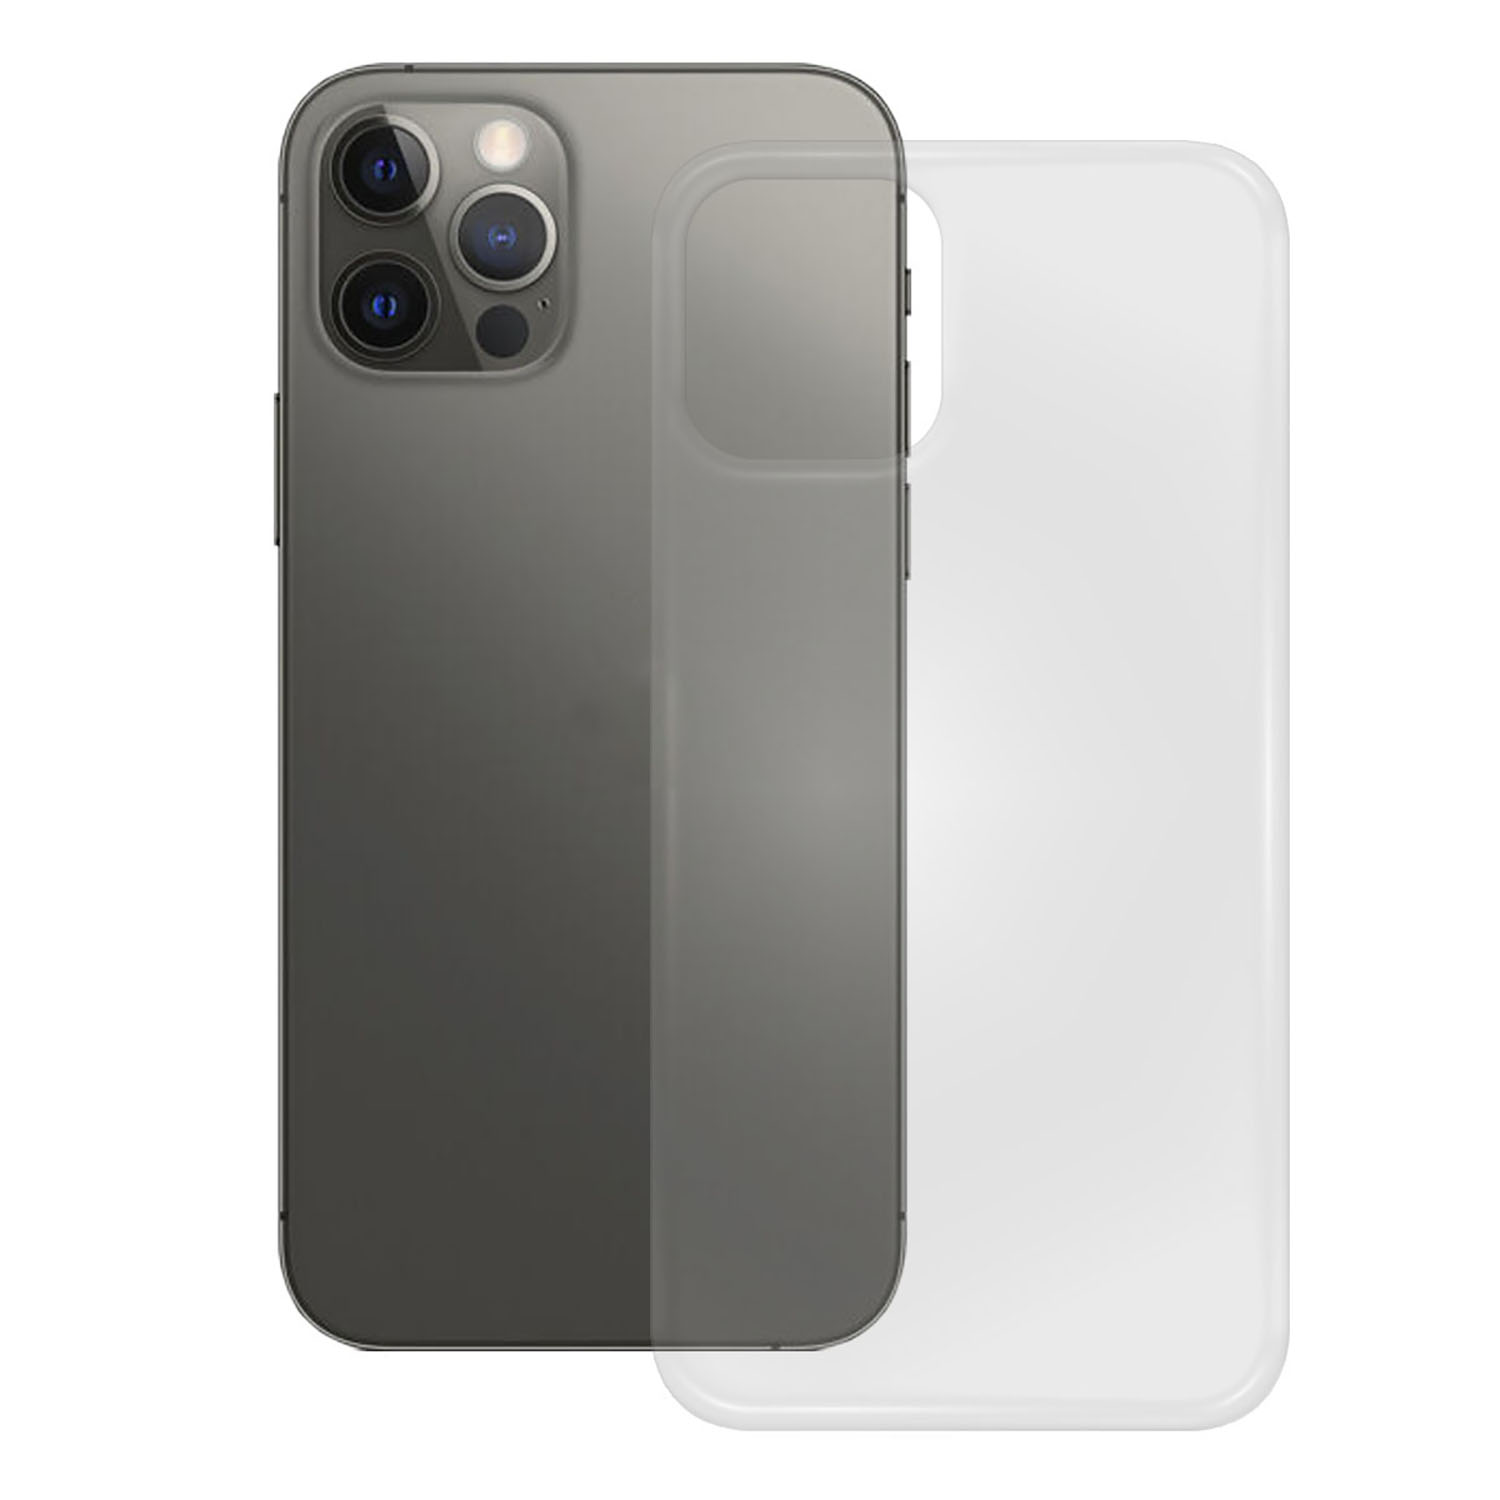 Pro Backcover, Apple, iPhone 12 Case, Transparent transparent, PEDEA Max, TPU